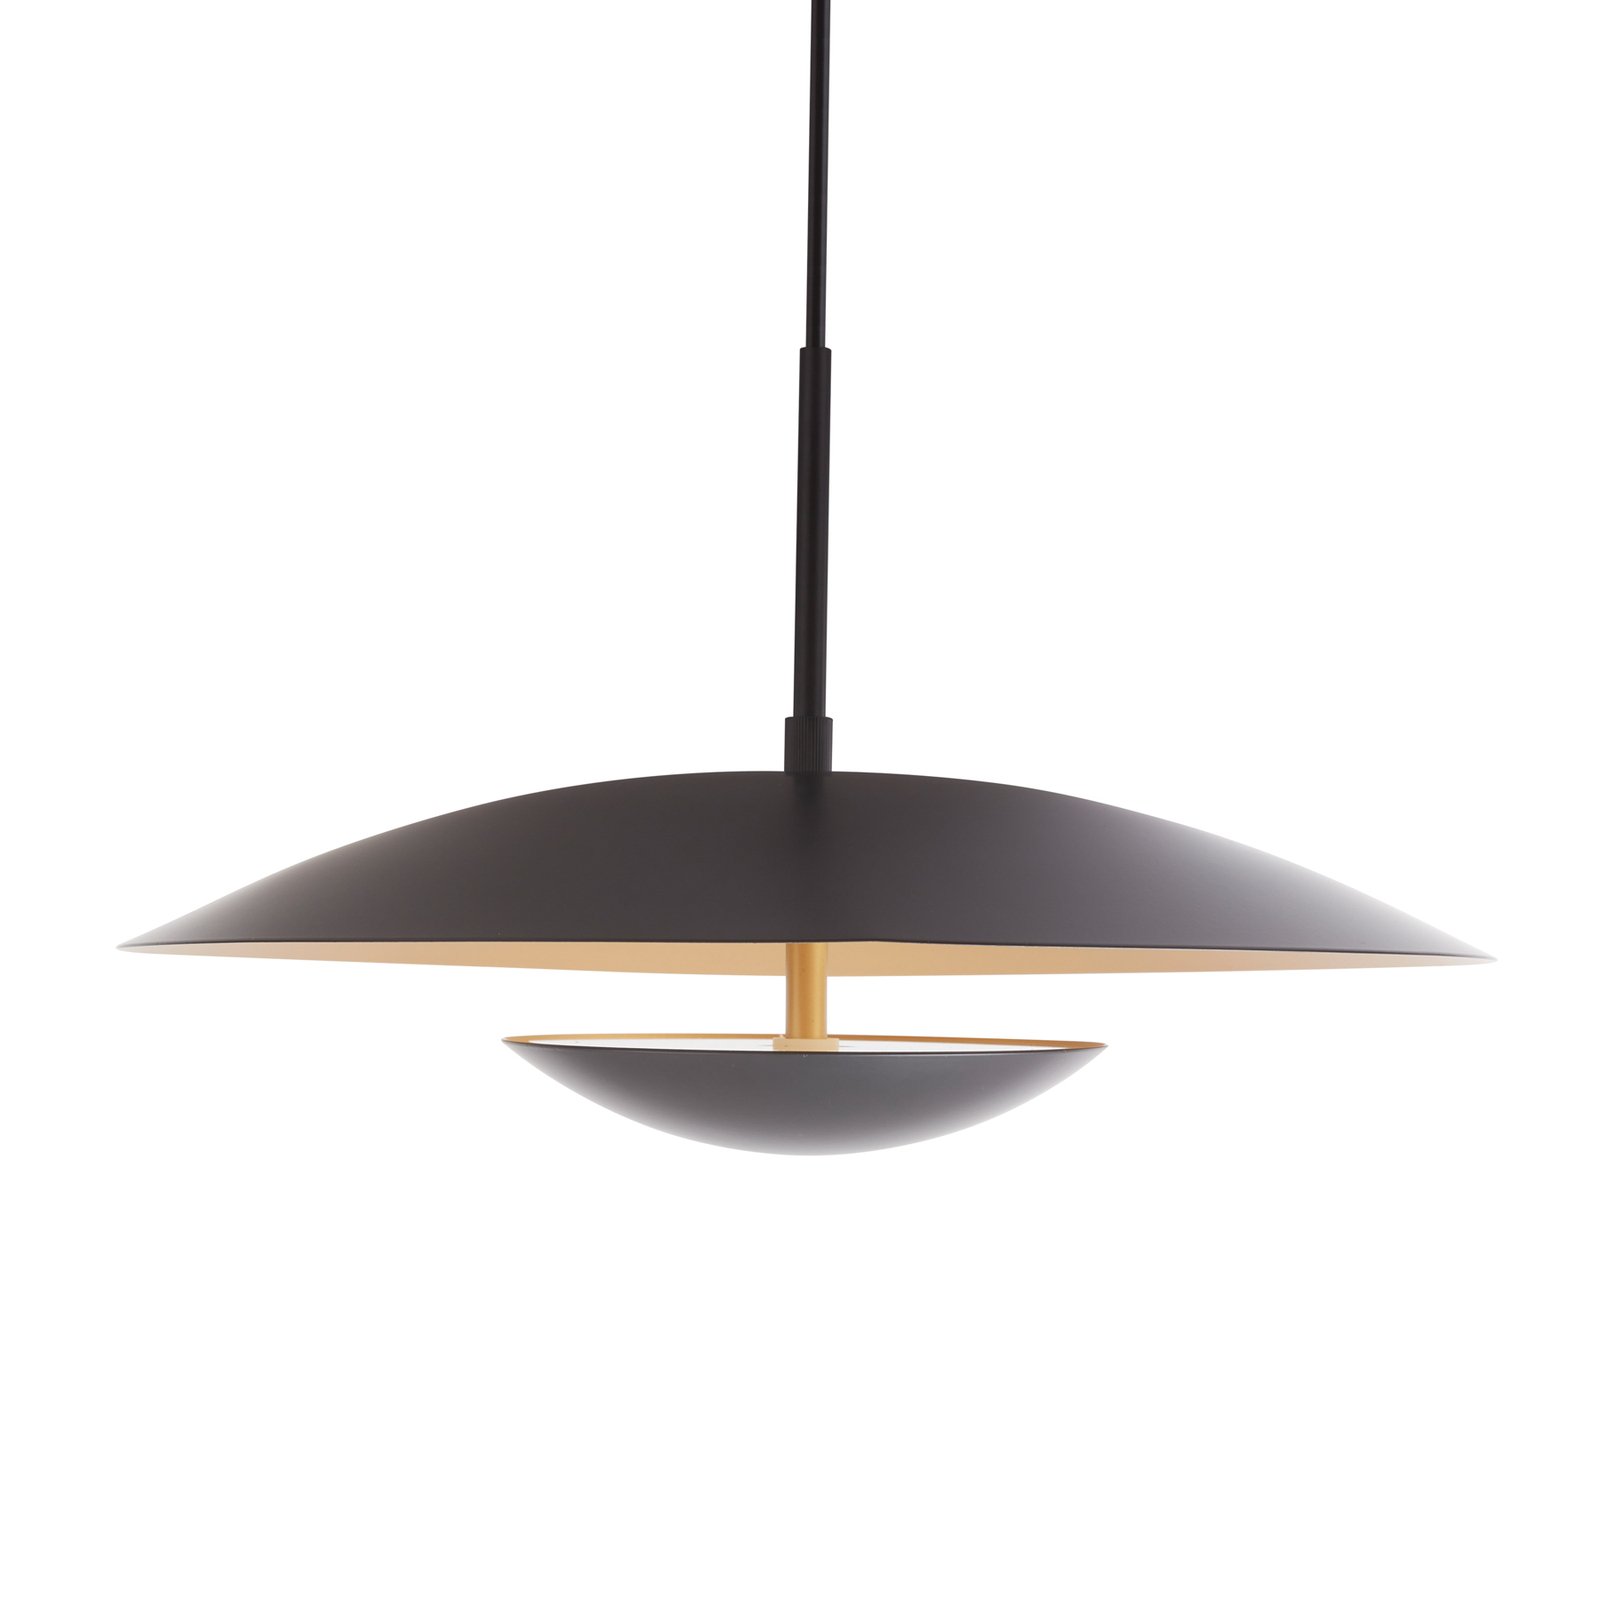 Lindby hanglamp Tiama, metaal, zwart/goud, Ø 40 cm